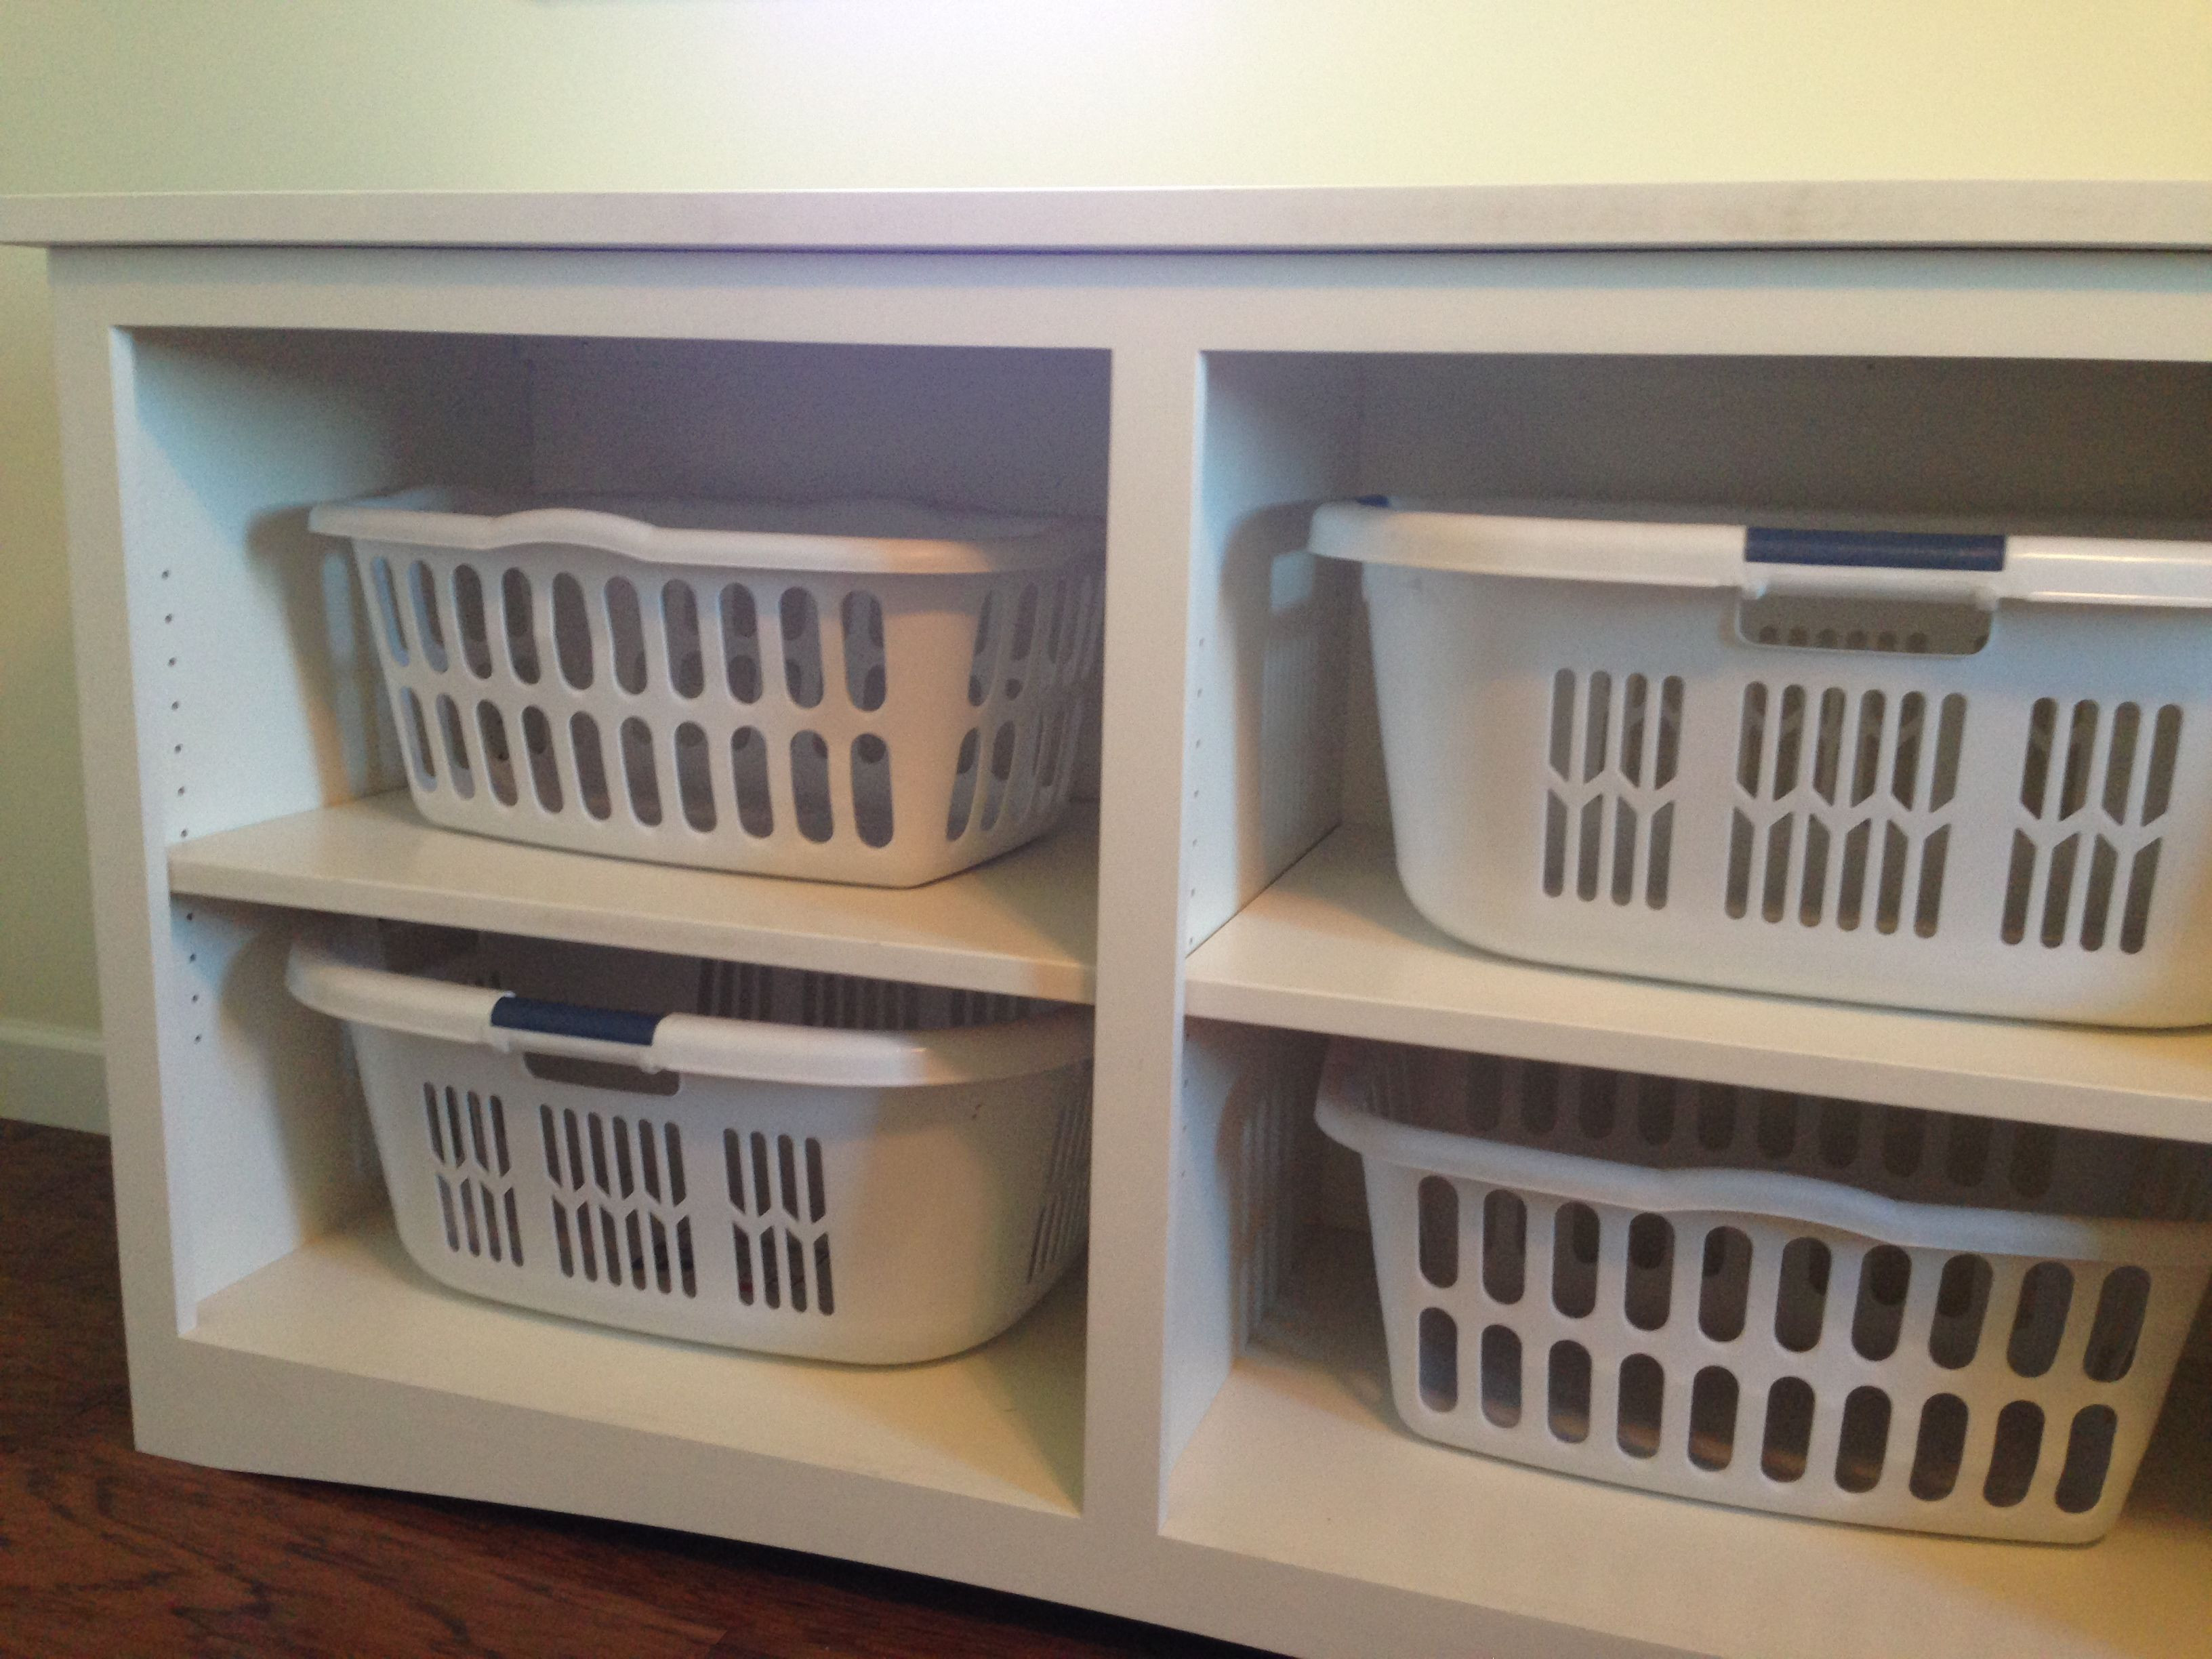 Best ideas about Laundry Basket Storage
. Save or Pin laundry basket storage The Five Year Plan Now.